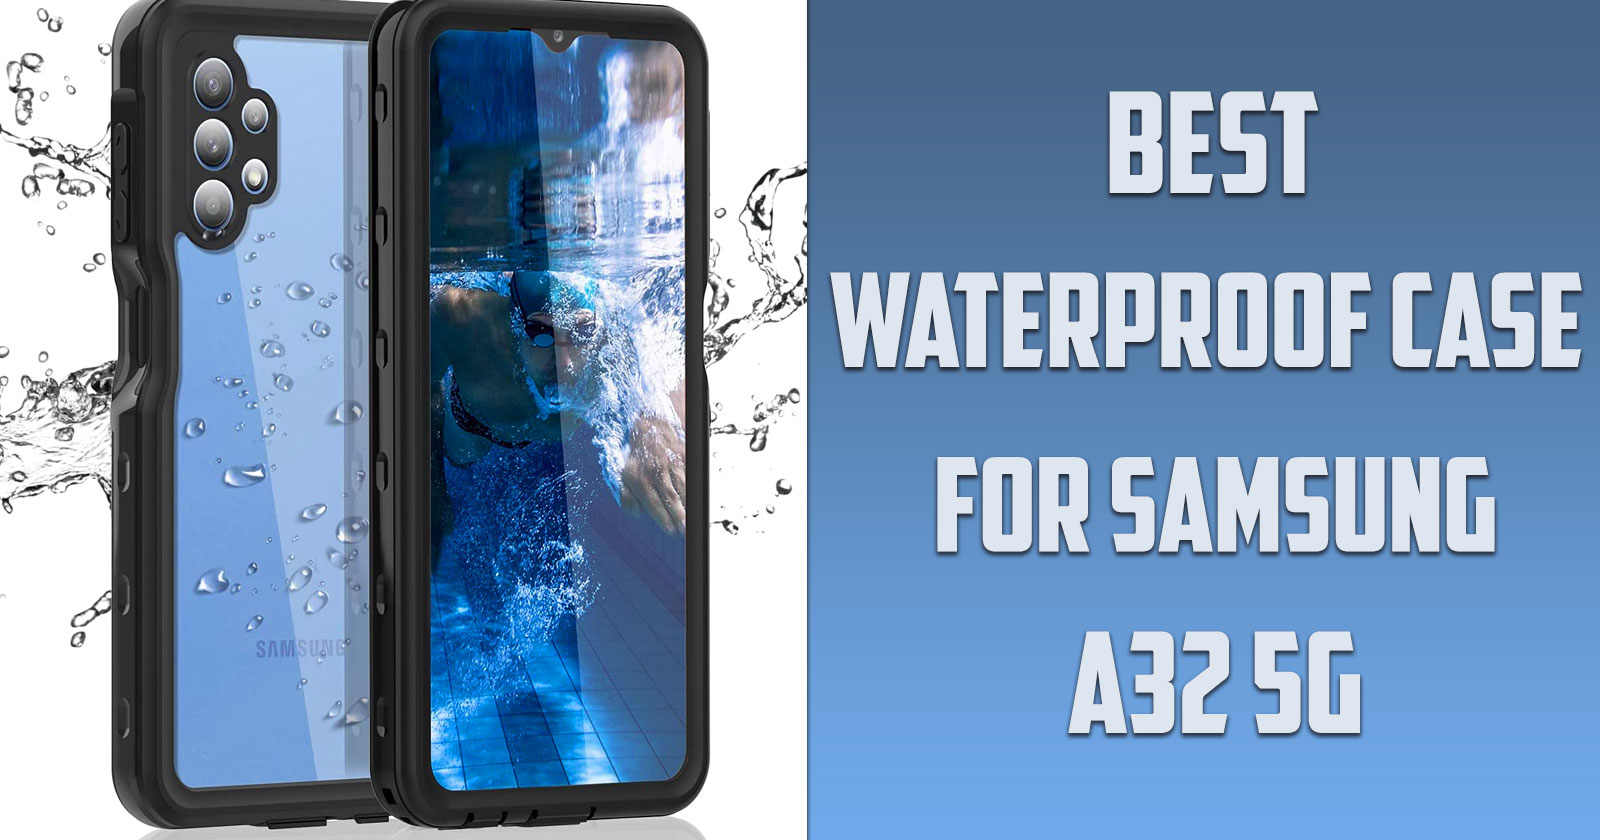 Best Waterproof Case for Samsung A32 5G